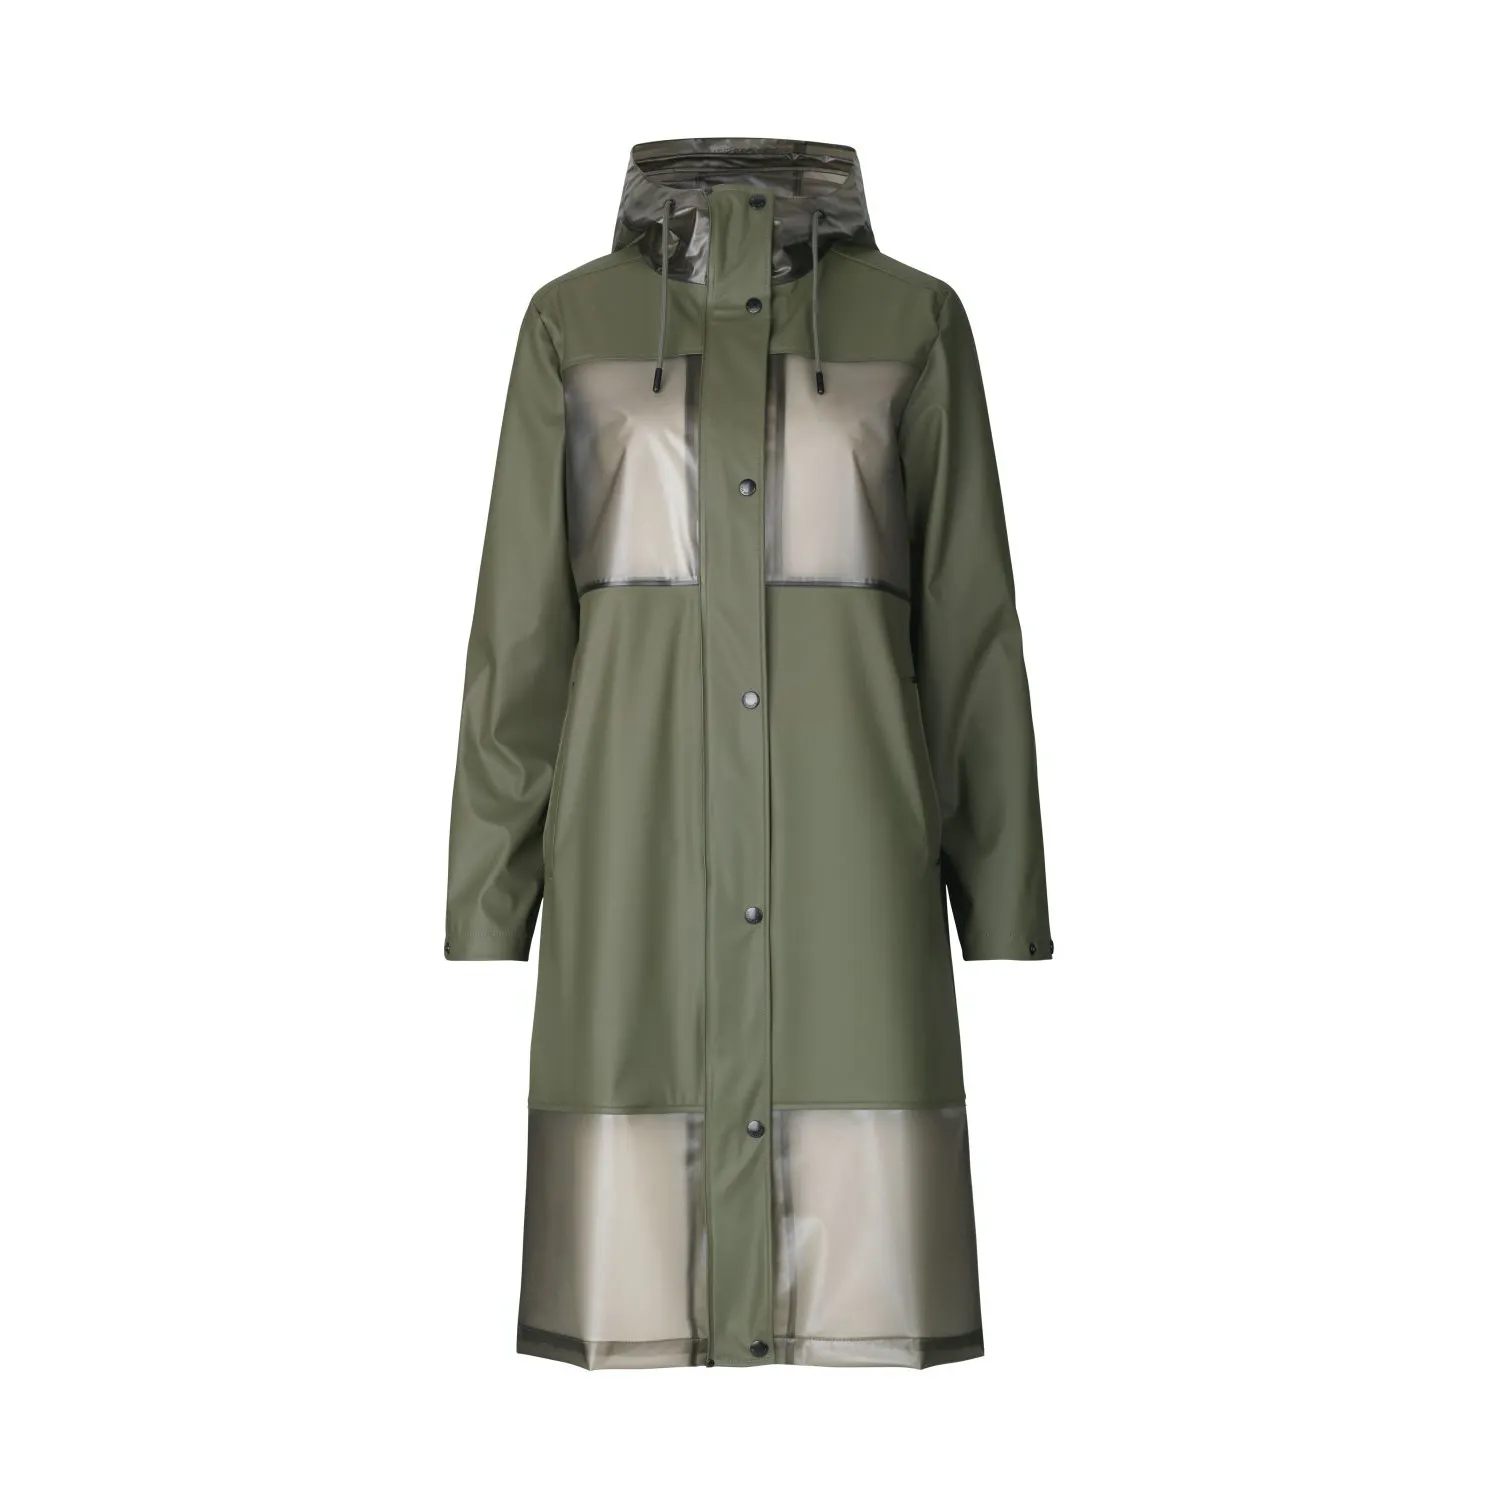 Top Selling PVC Cheap Price Rain Coats Adults Size Waterproof Raincoat For Motorcycle Riding Rain Coat & Jackets